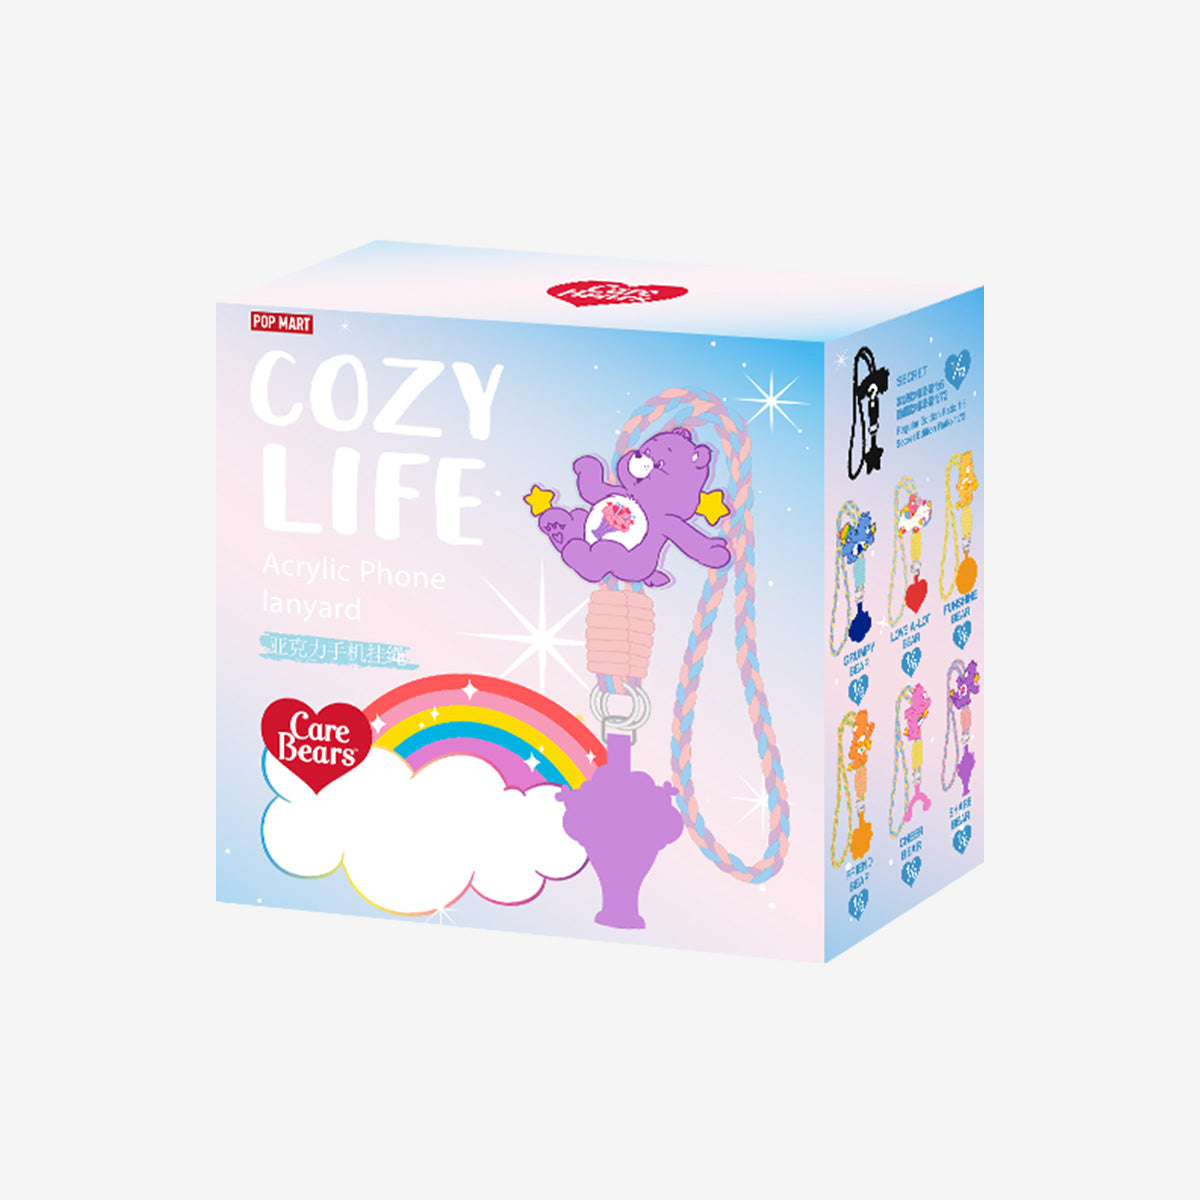 Pop Mart: Care Bears Cozy Life Series-Acrylic Phone Lanyard Blind Box